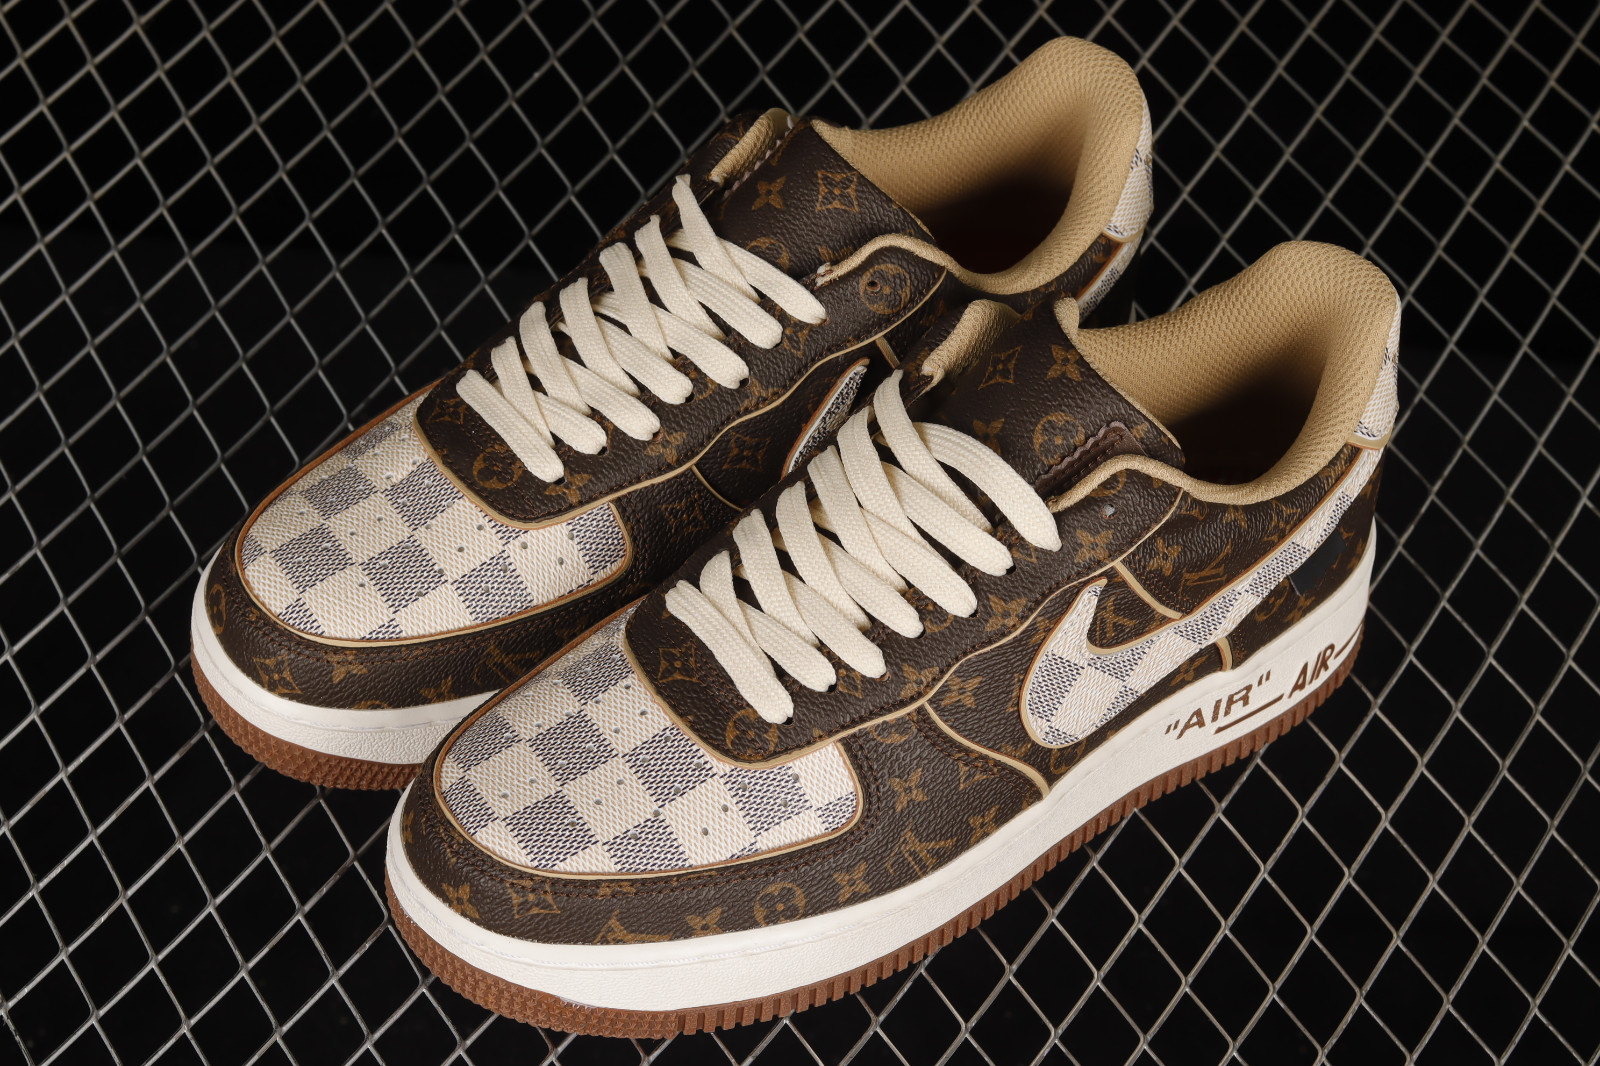 Nike Air Force 1 Low Louis Vuitton Monogram Brown Damier Azur Men's -  Sneakers - US